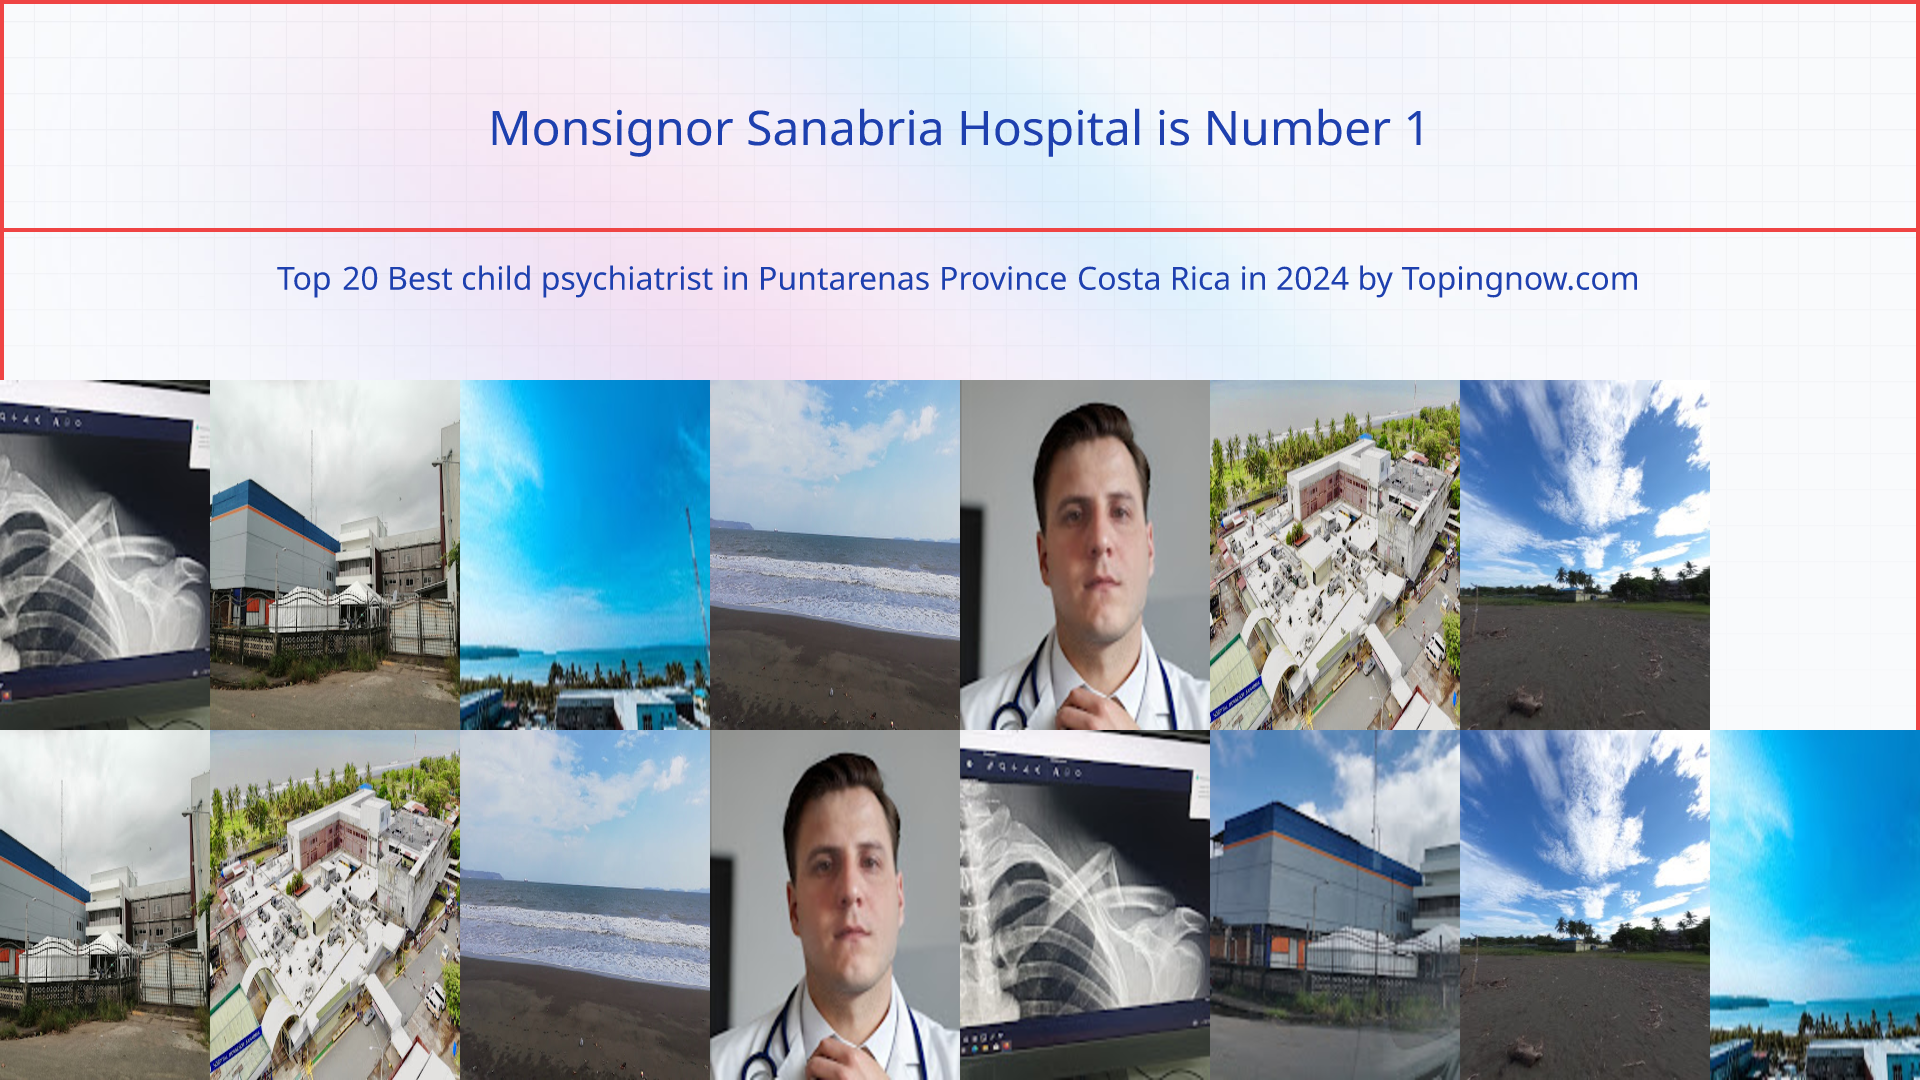 Monsignor Sanabria Hospital: Top 20 Best child psychiatrist in Puntarenas Province Costa Rica in 2024